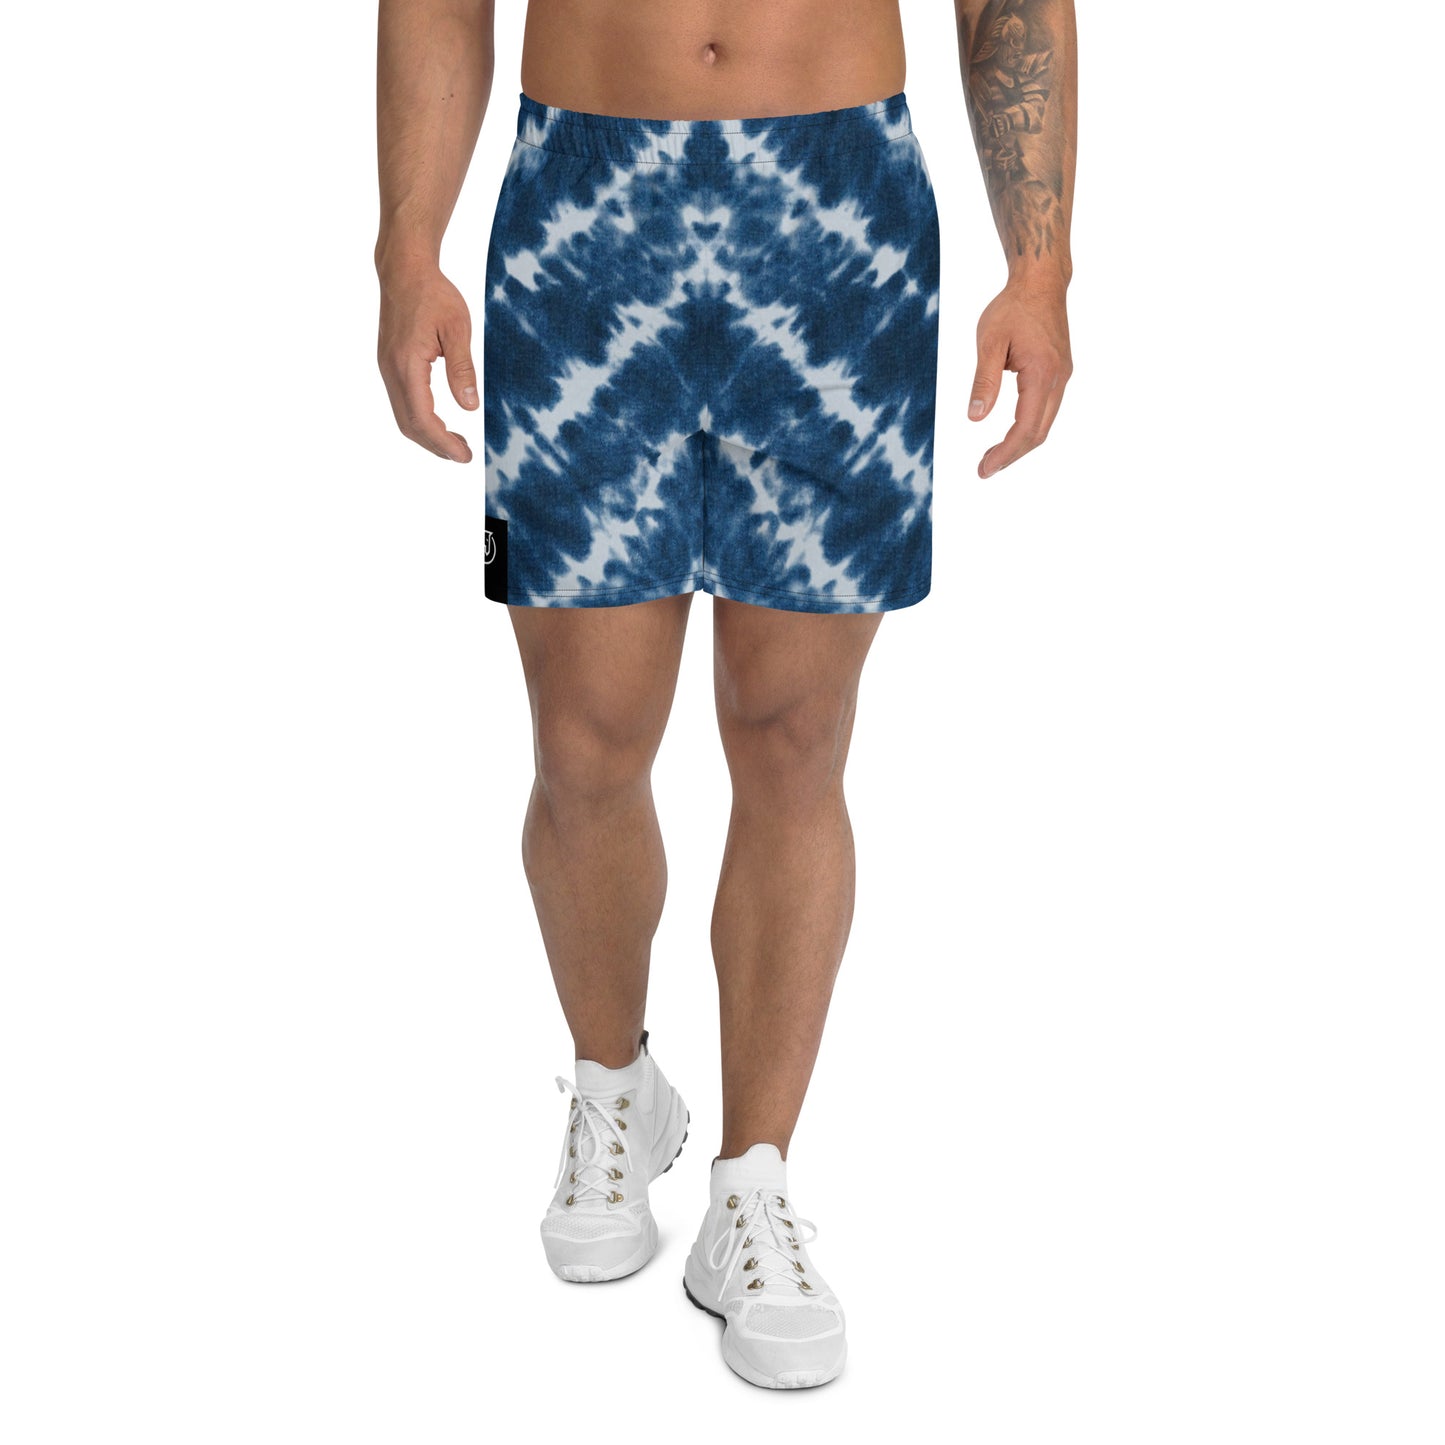 Humble Sportswear, men's color match activewear color block shorts